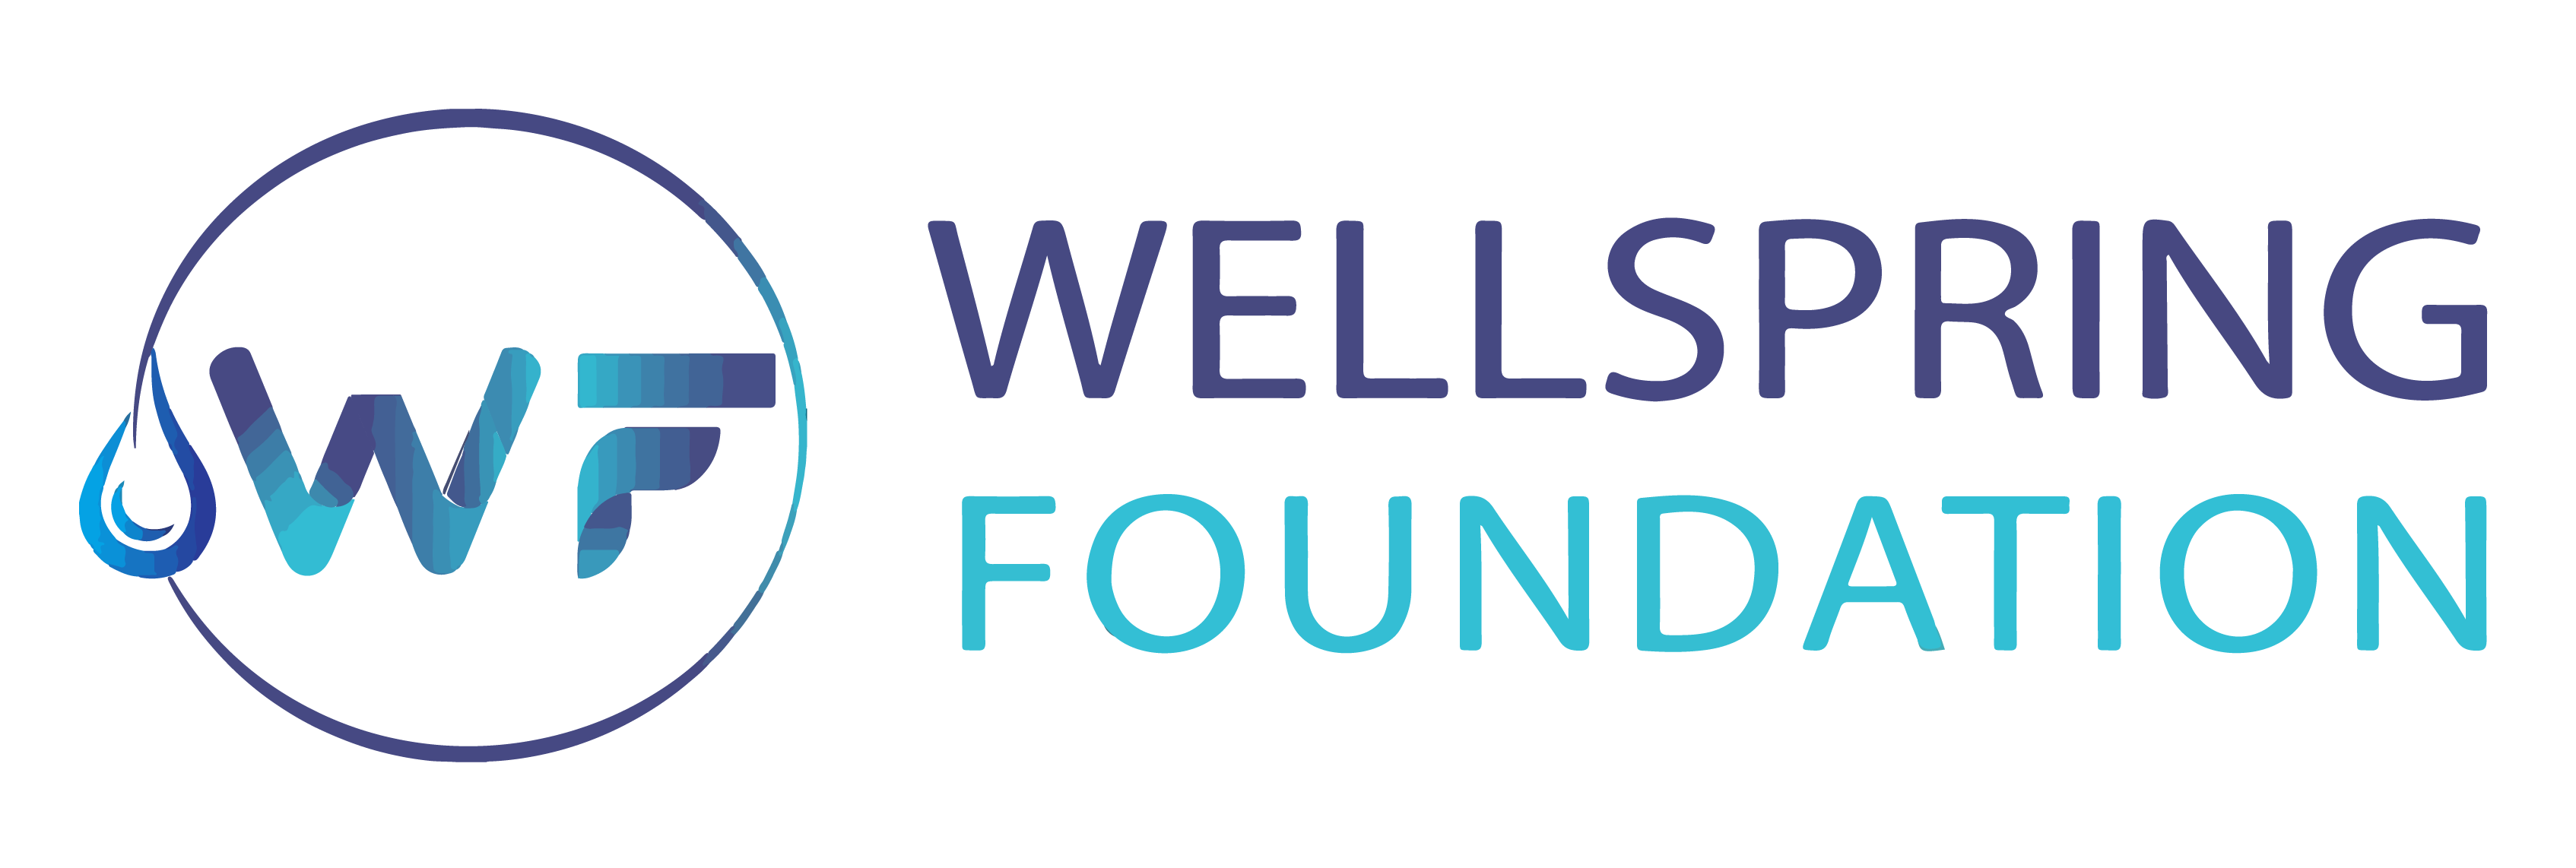 Wellspring Foundation